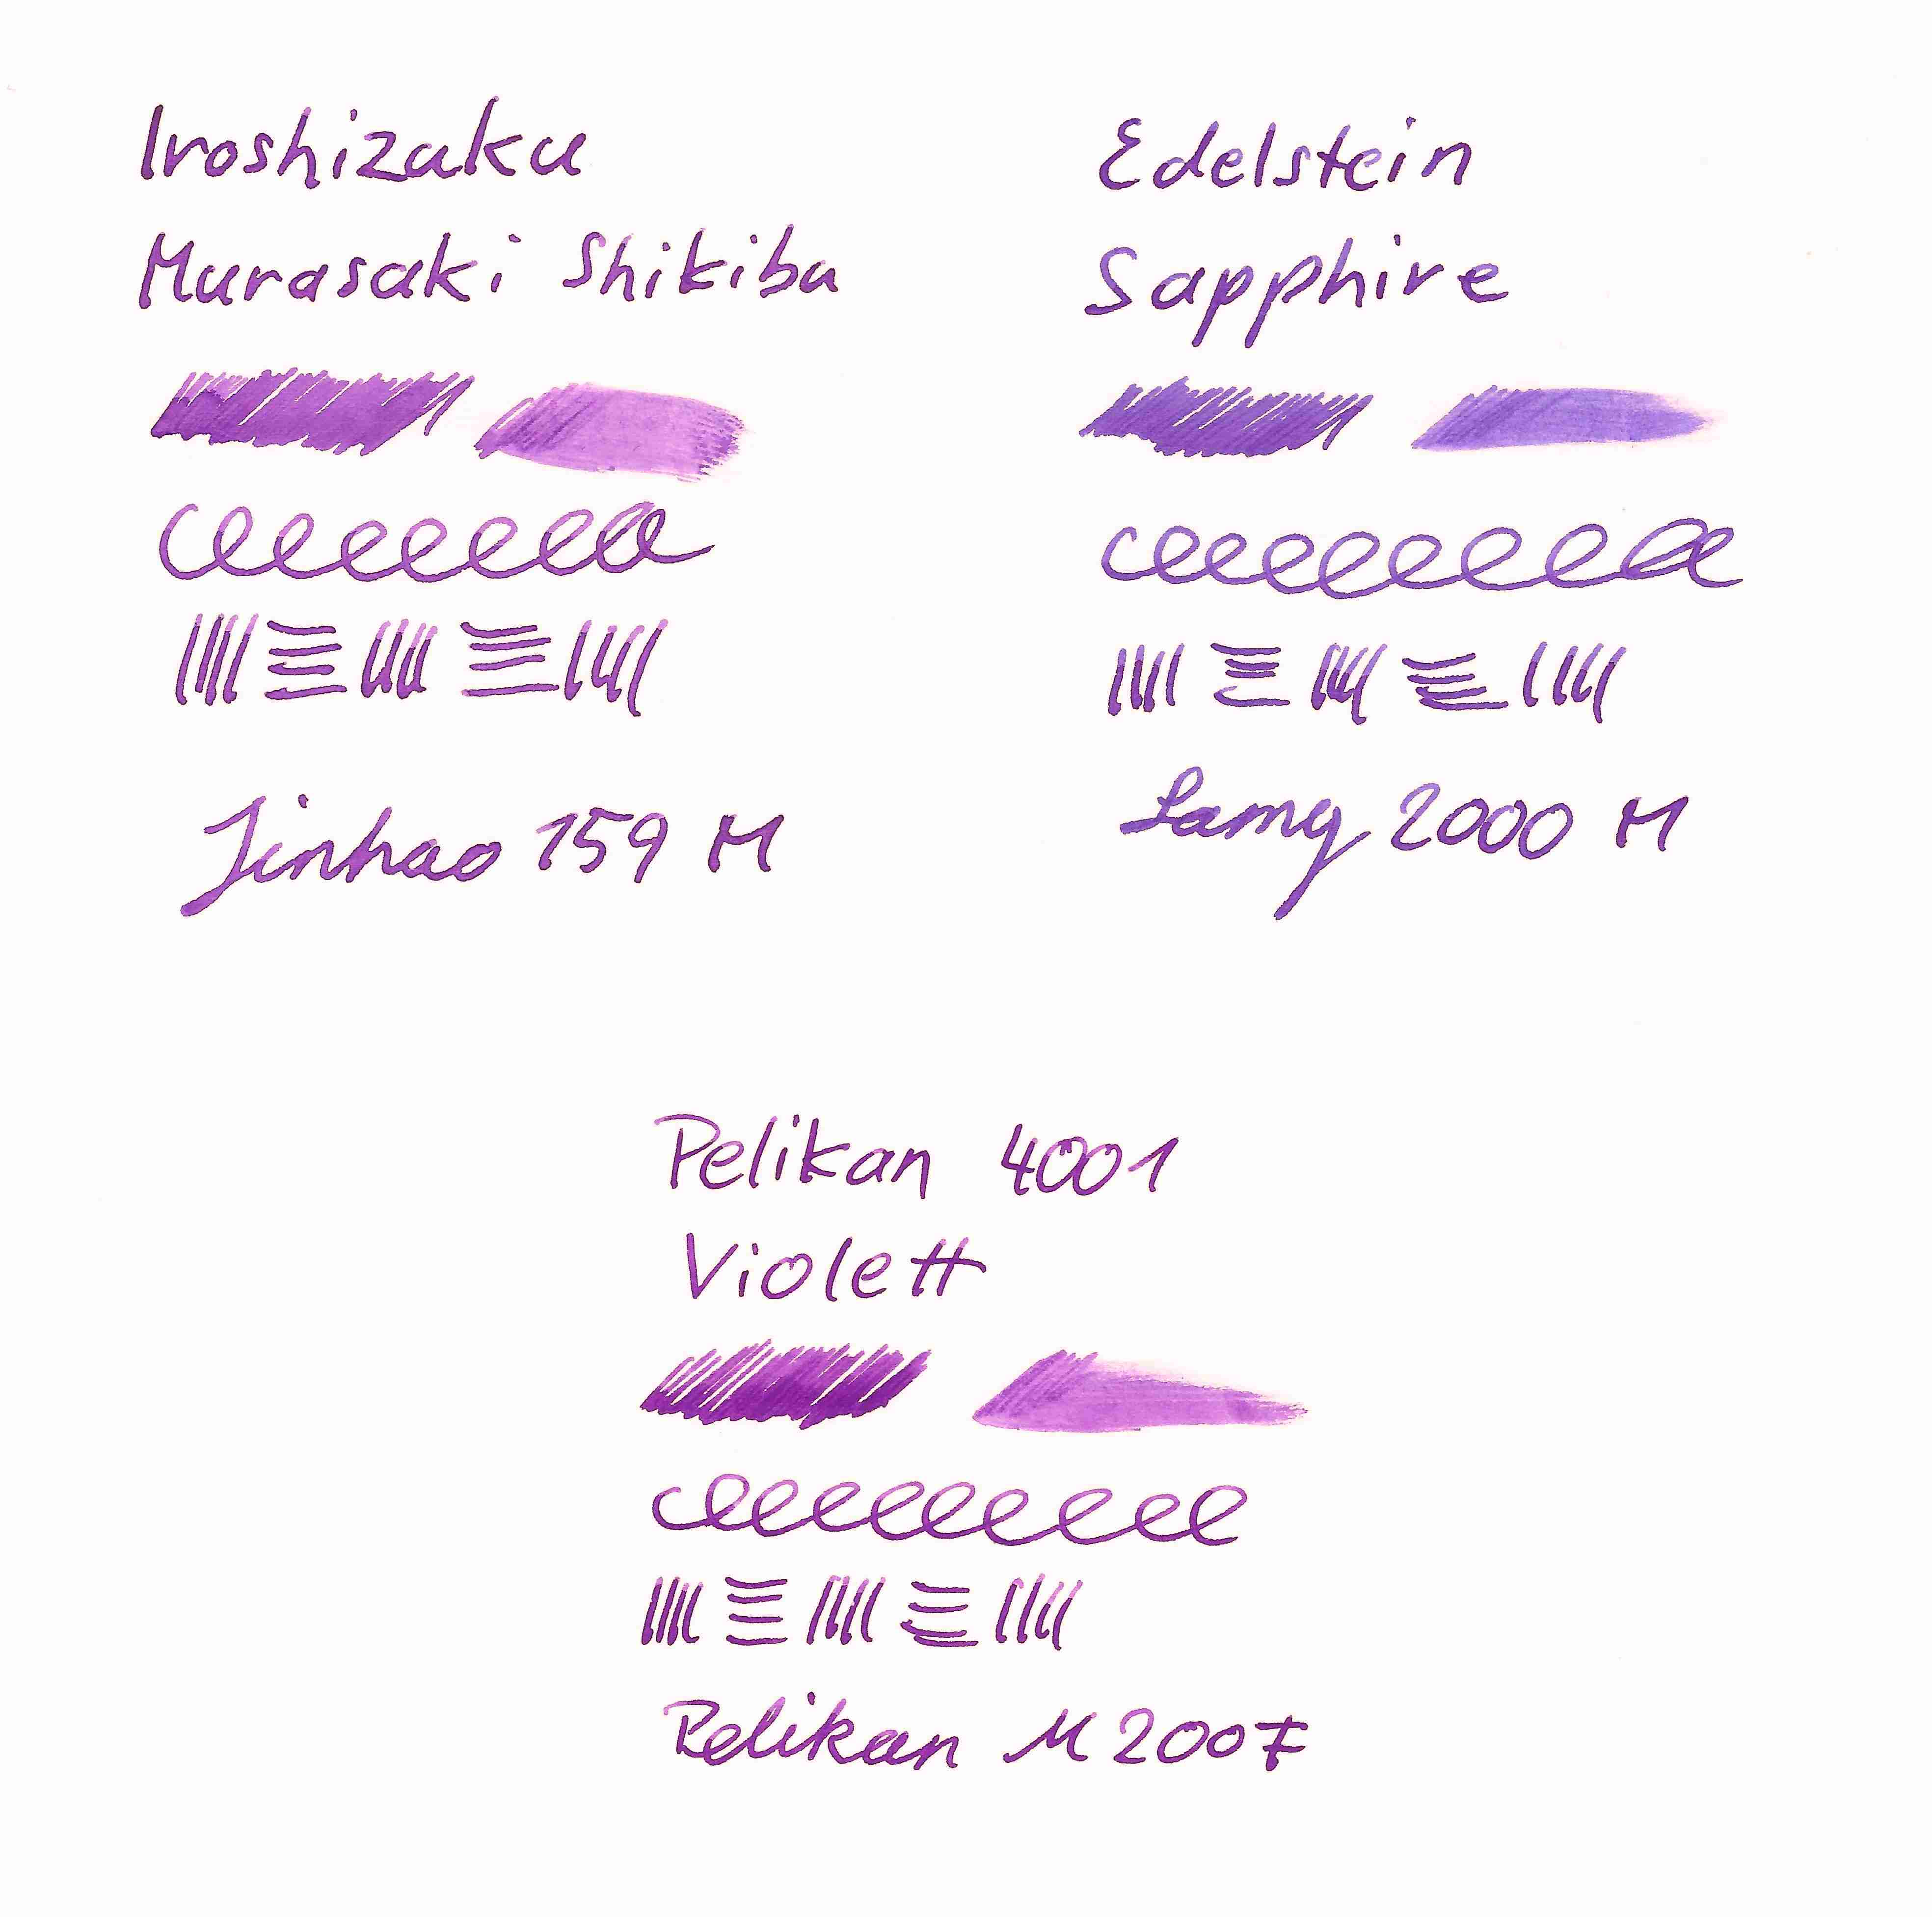 Vergleich_murasaki-sapphire-violett2.jpg